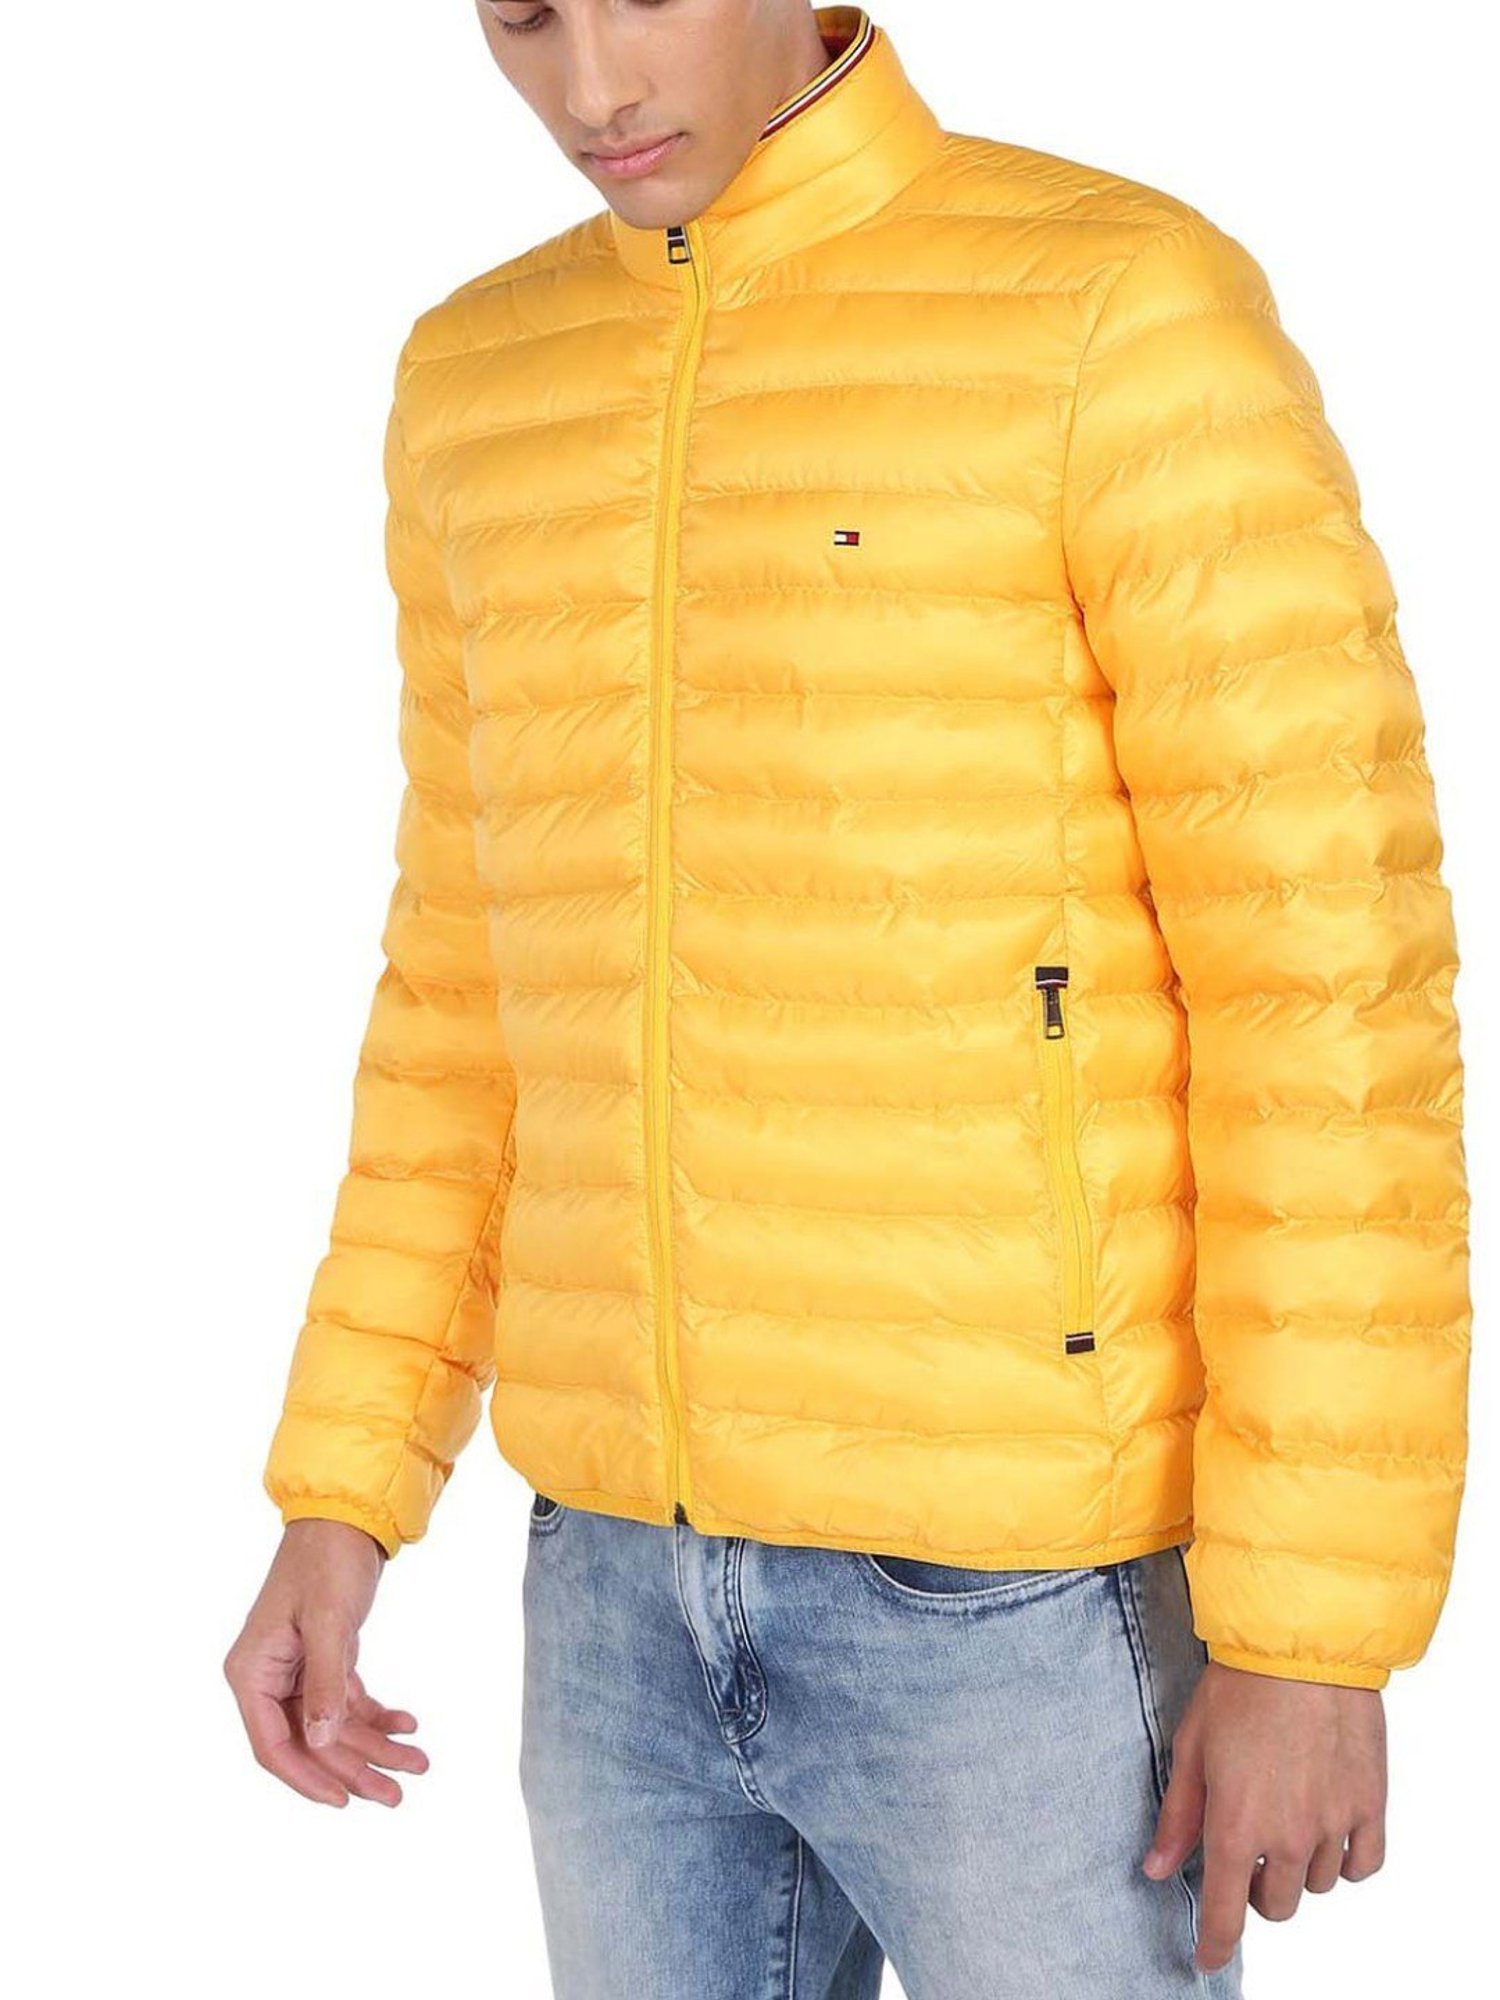 Women's Yellow Puffer Jackets & Down Coats | Nordstrom